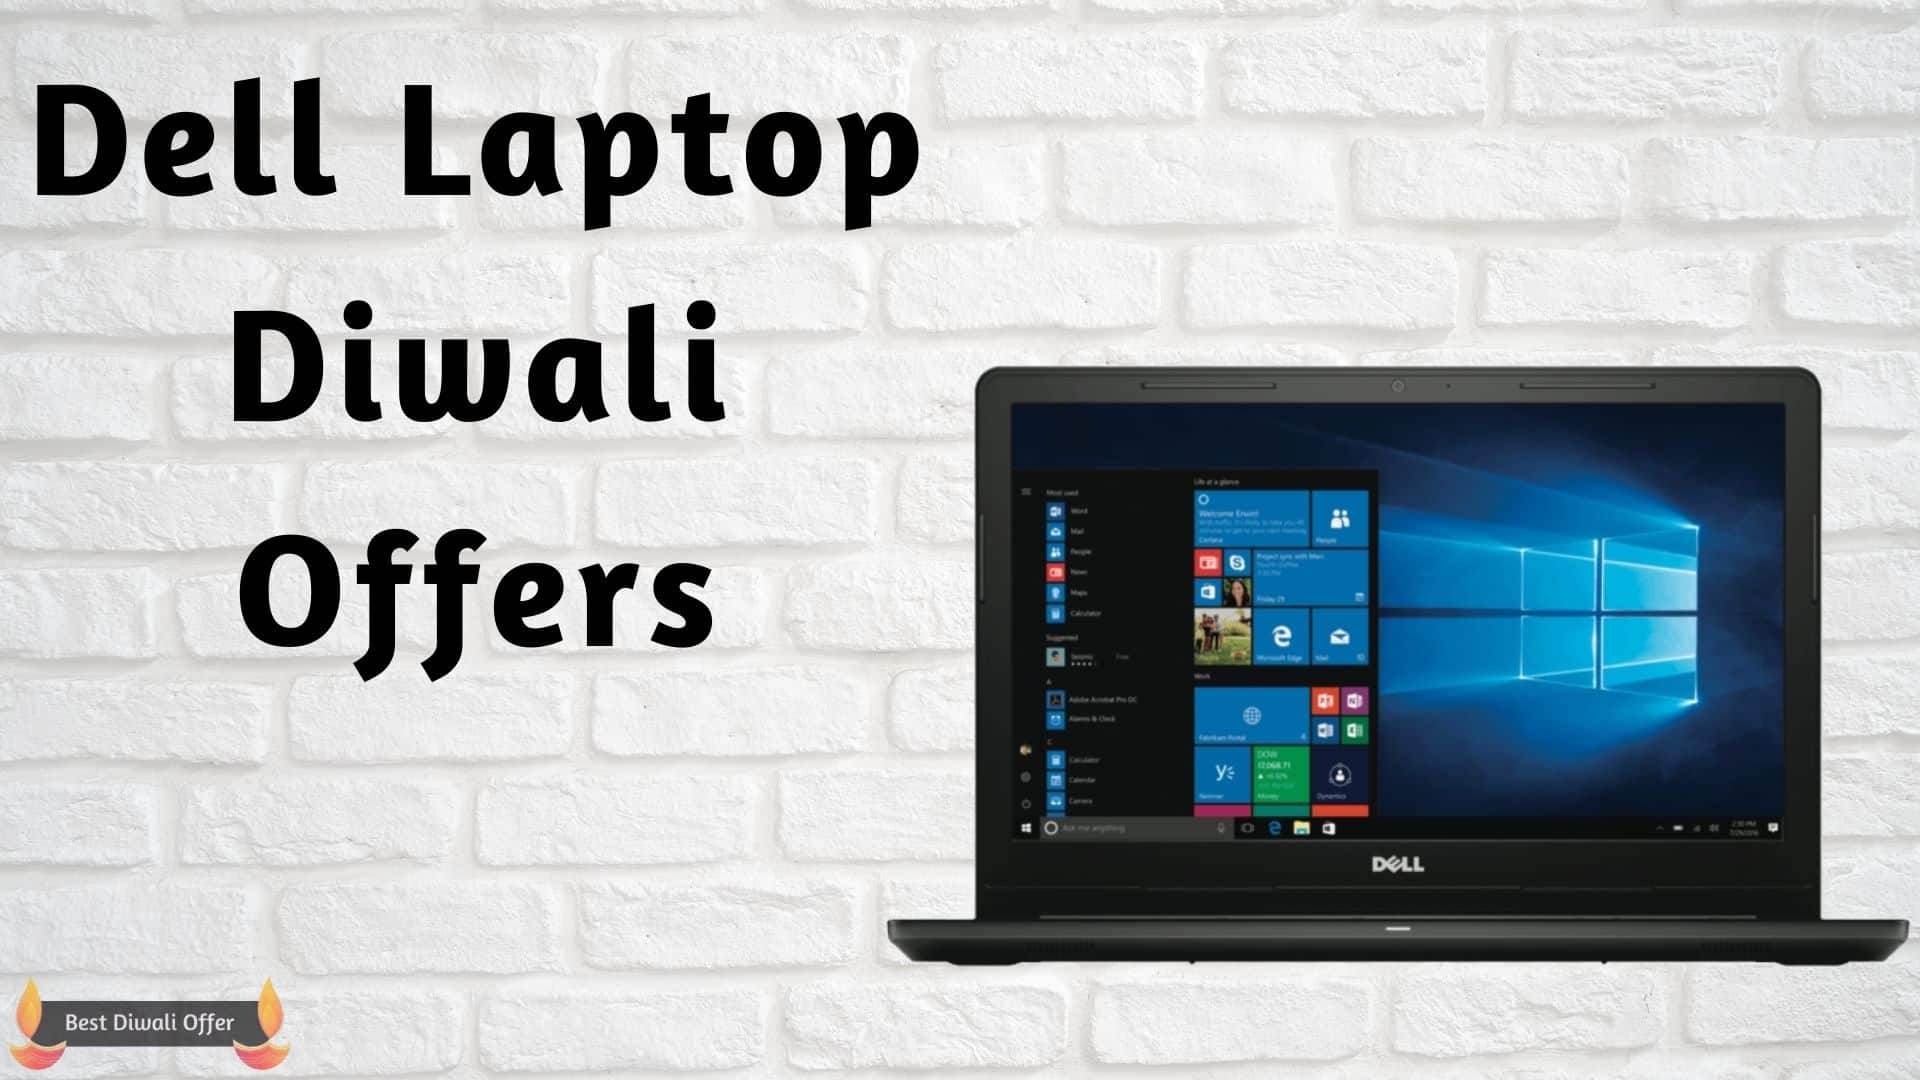 Dell Laptop Diwali Offers